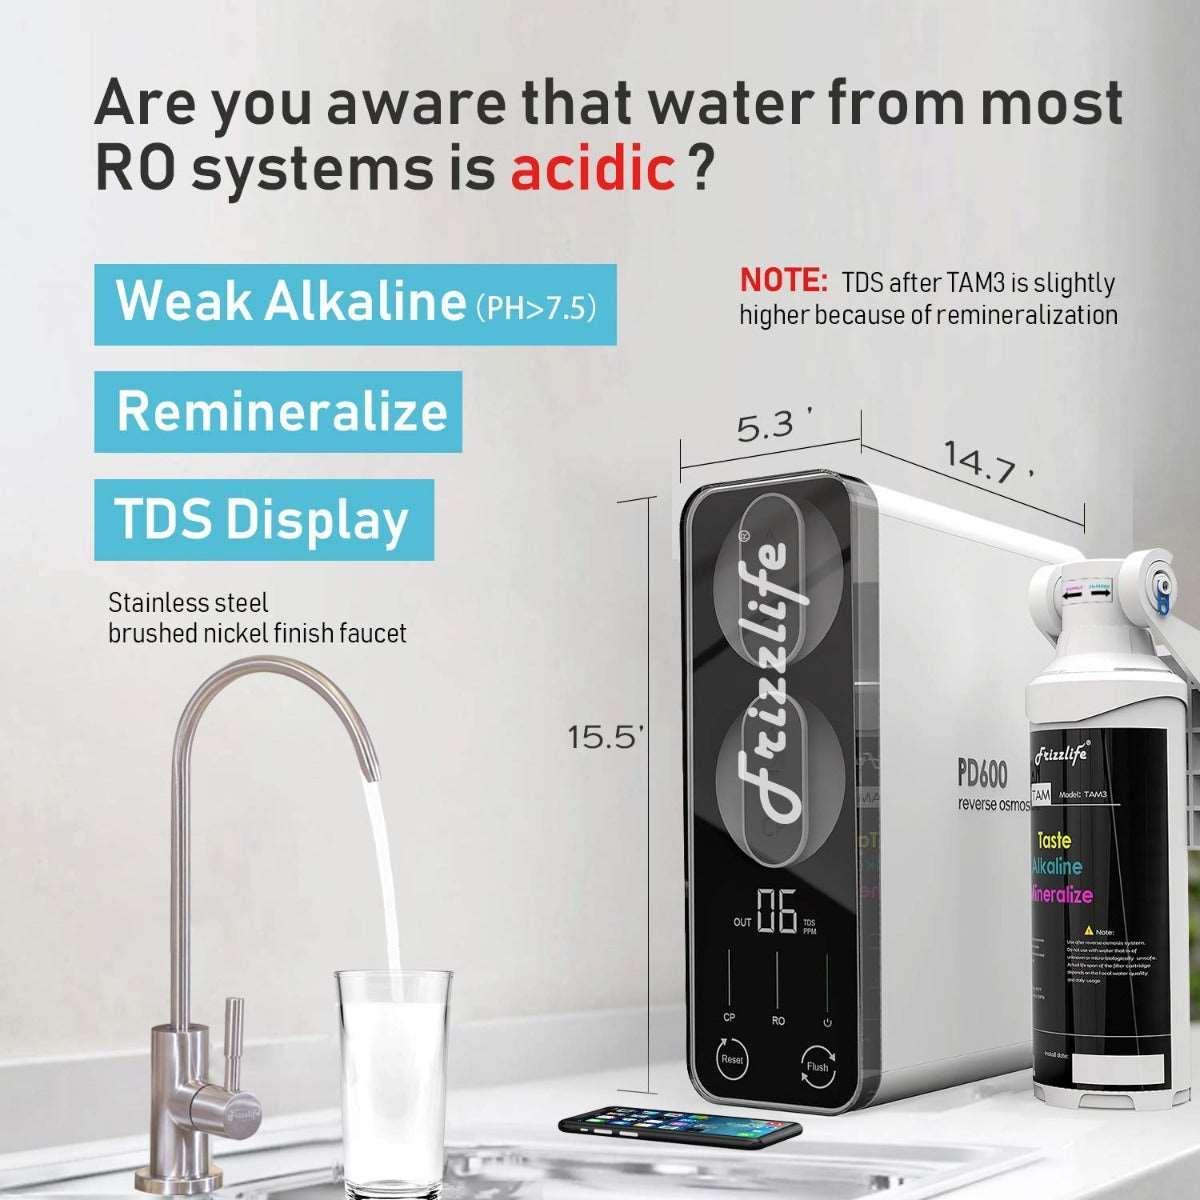 FrizzLife PD600 Reverse Osmosis Alkaline Water Filtration System - Alkaline World